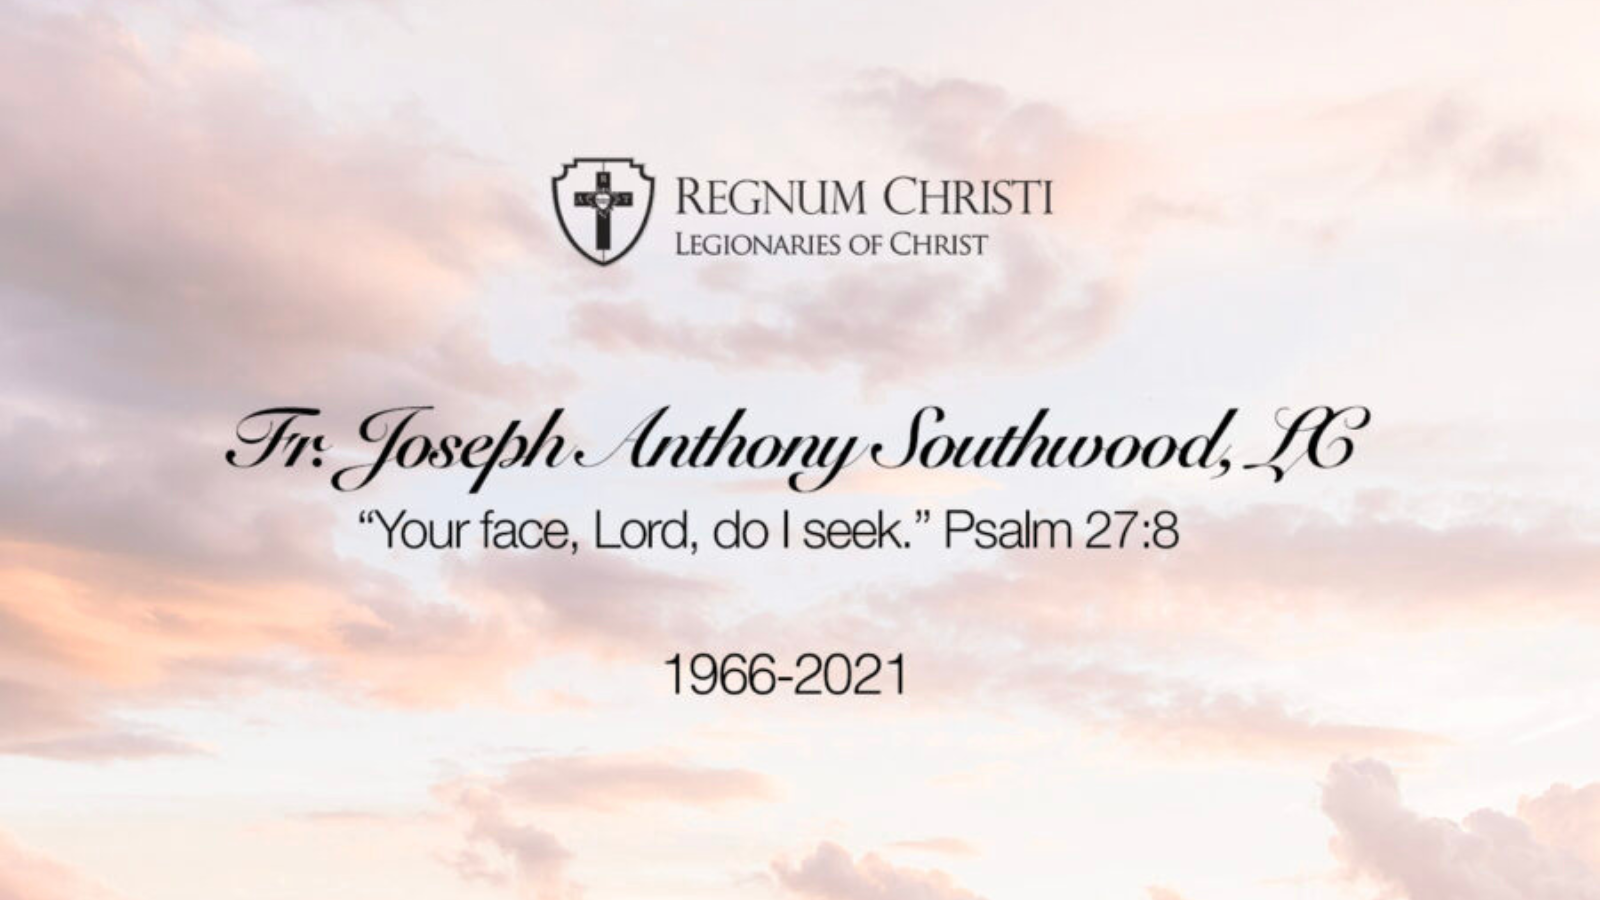 Fr. Joseph Anthony Southwood, L.C.